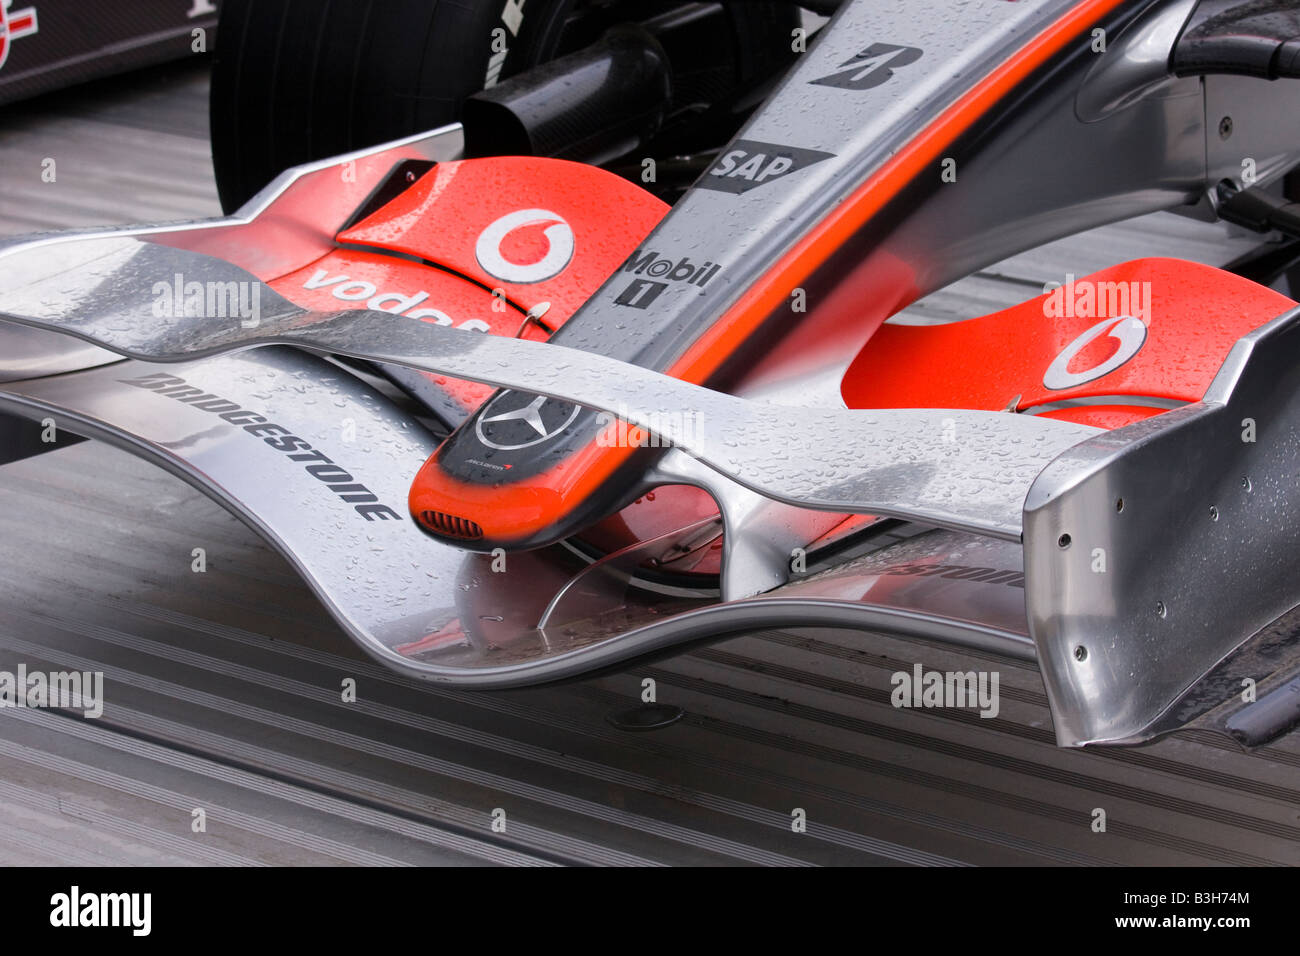 Formel 1 McLaren-Mercedes Frontflügel (2008 Stockfotografie - Alamy